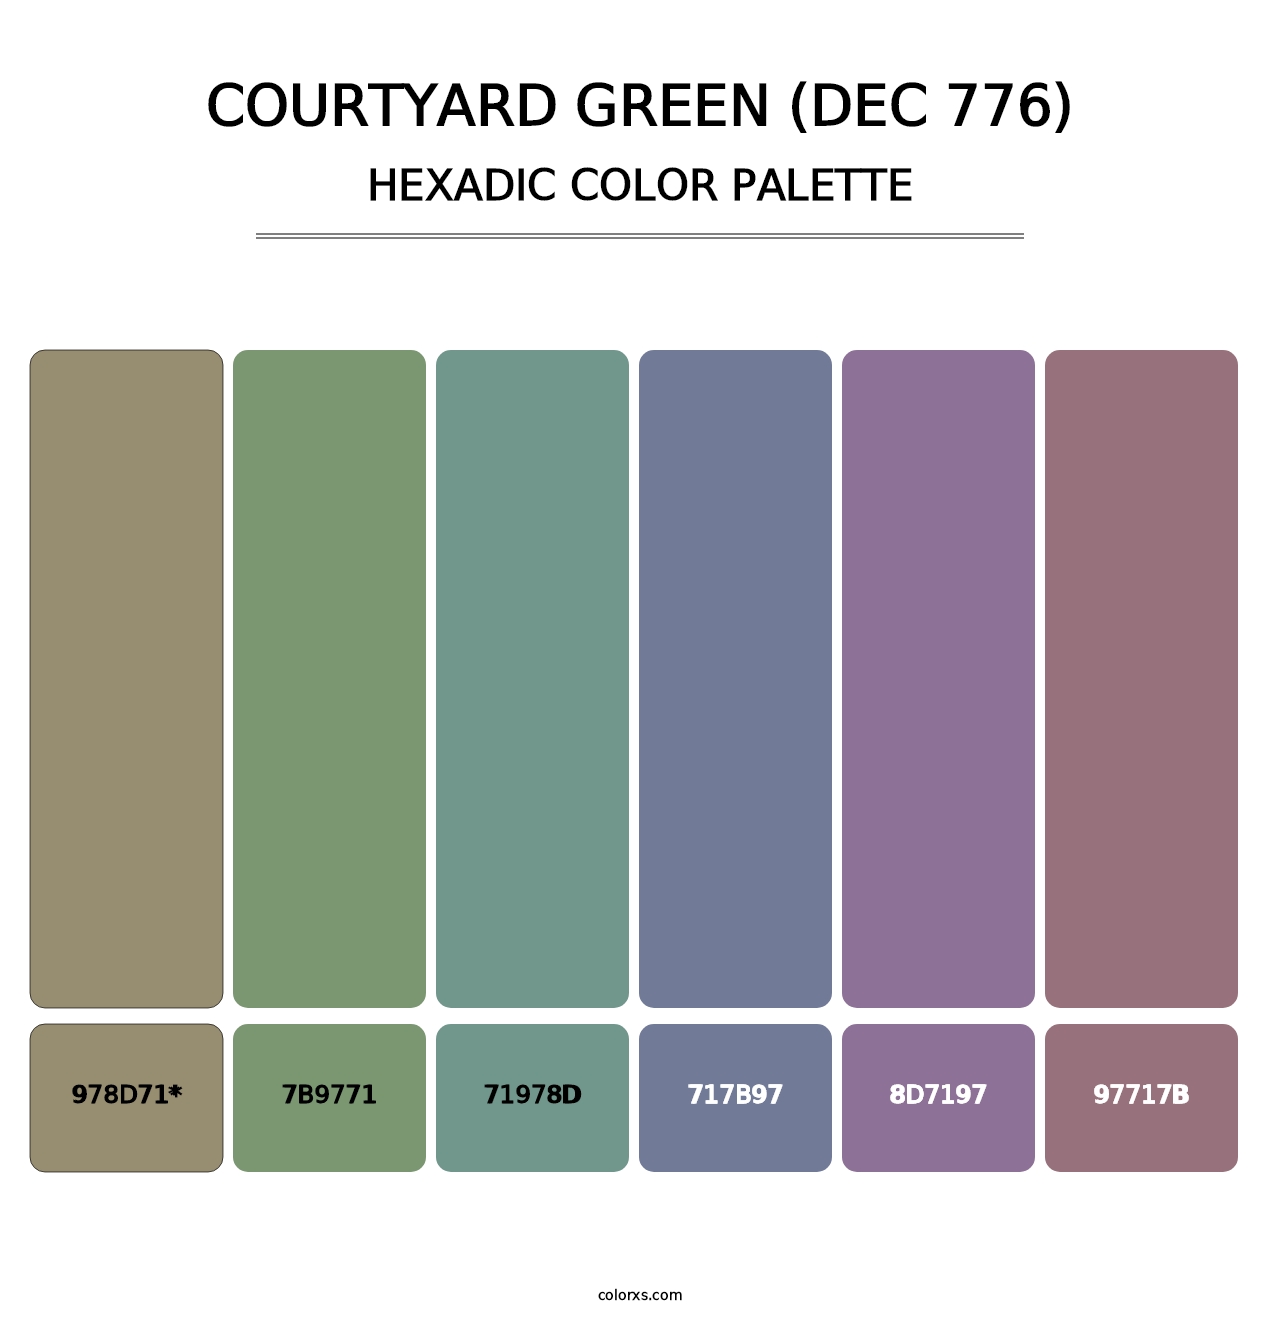 Courtyard Green (DEC 776) - Hexadic Color Palette